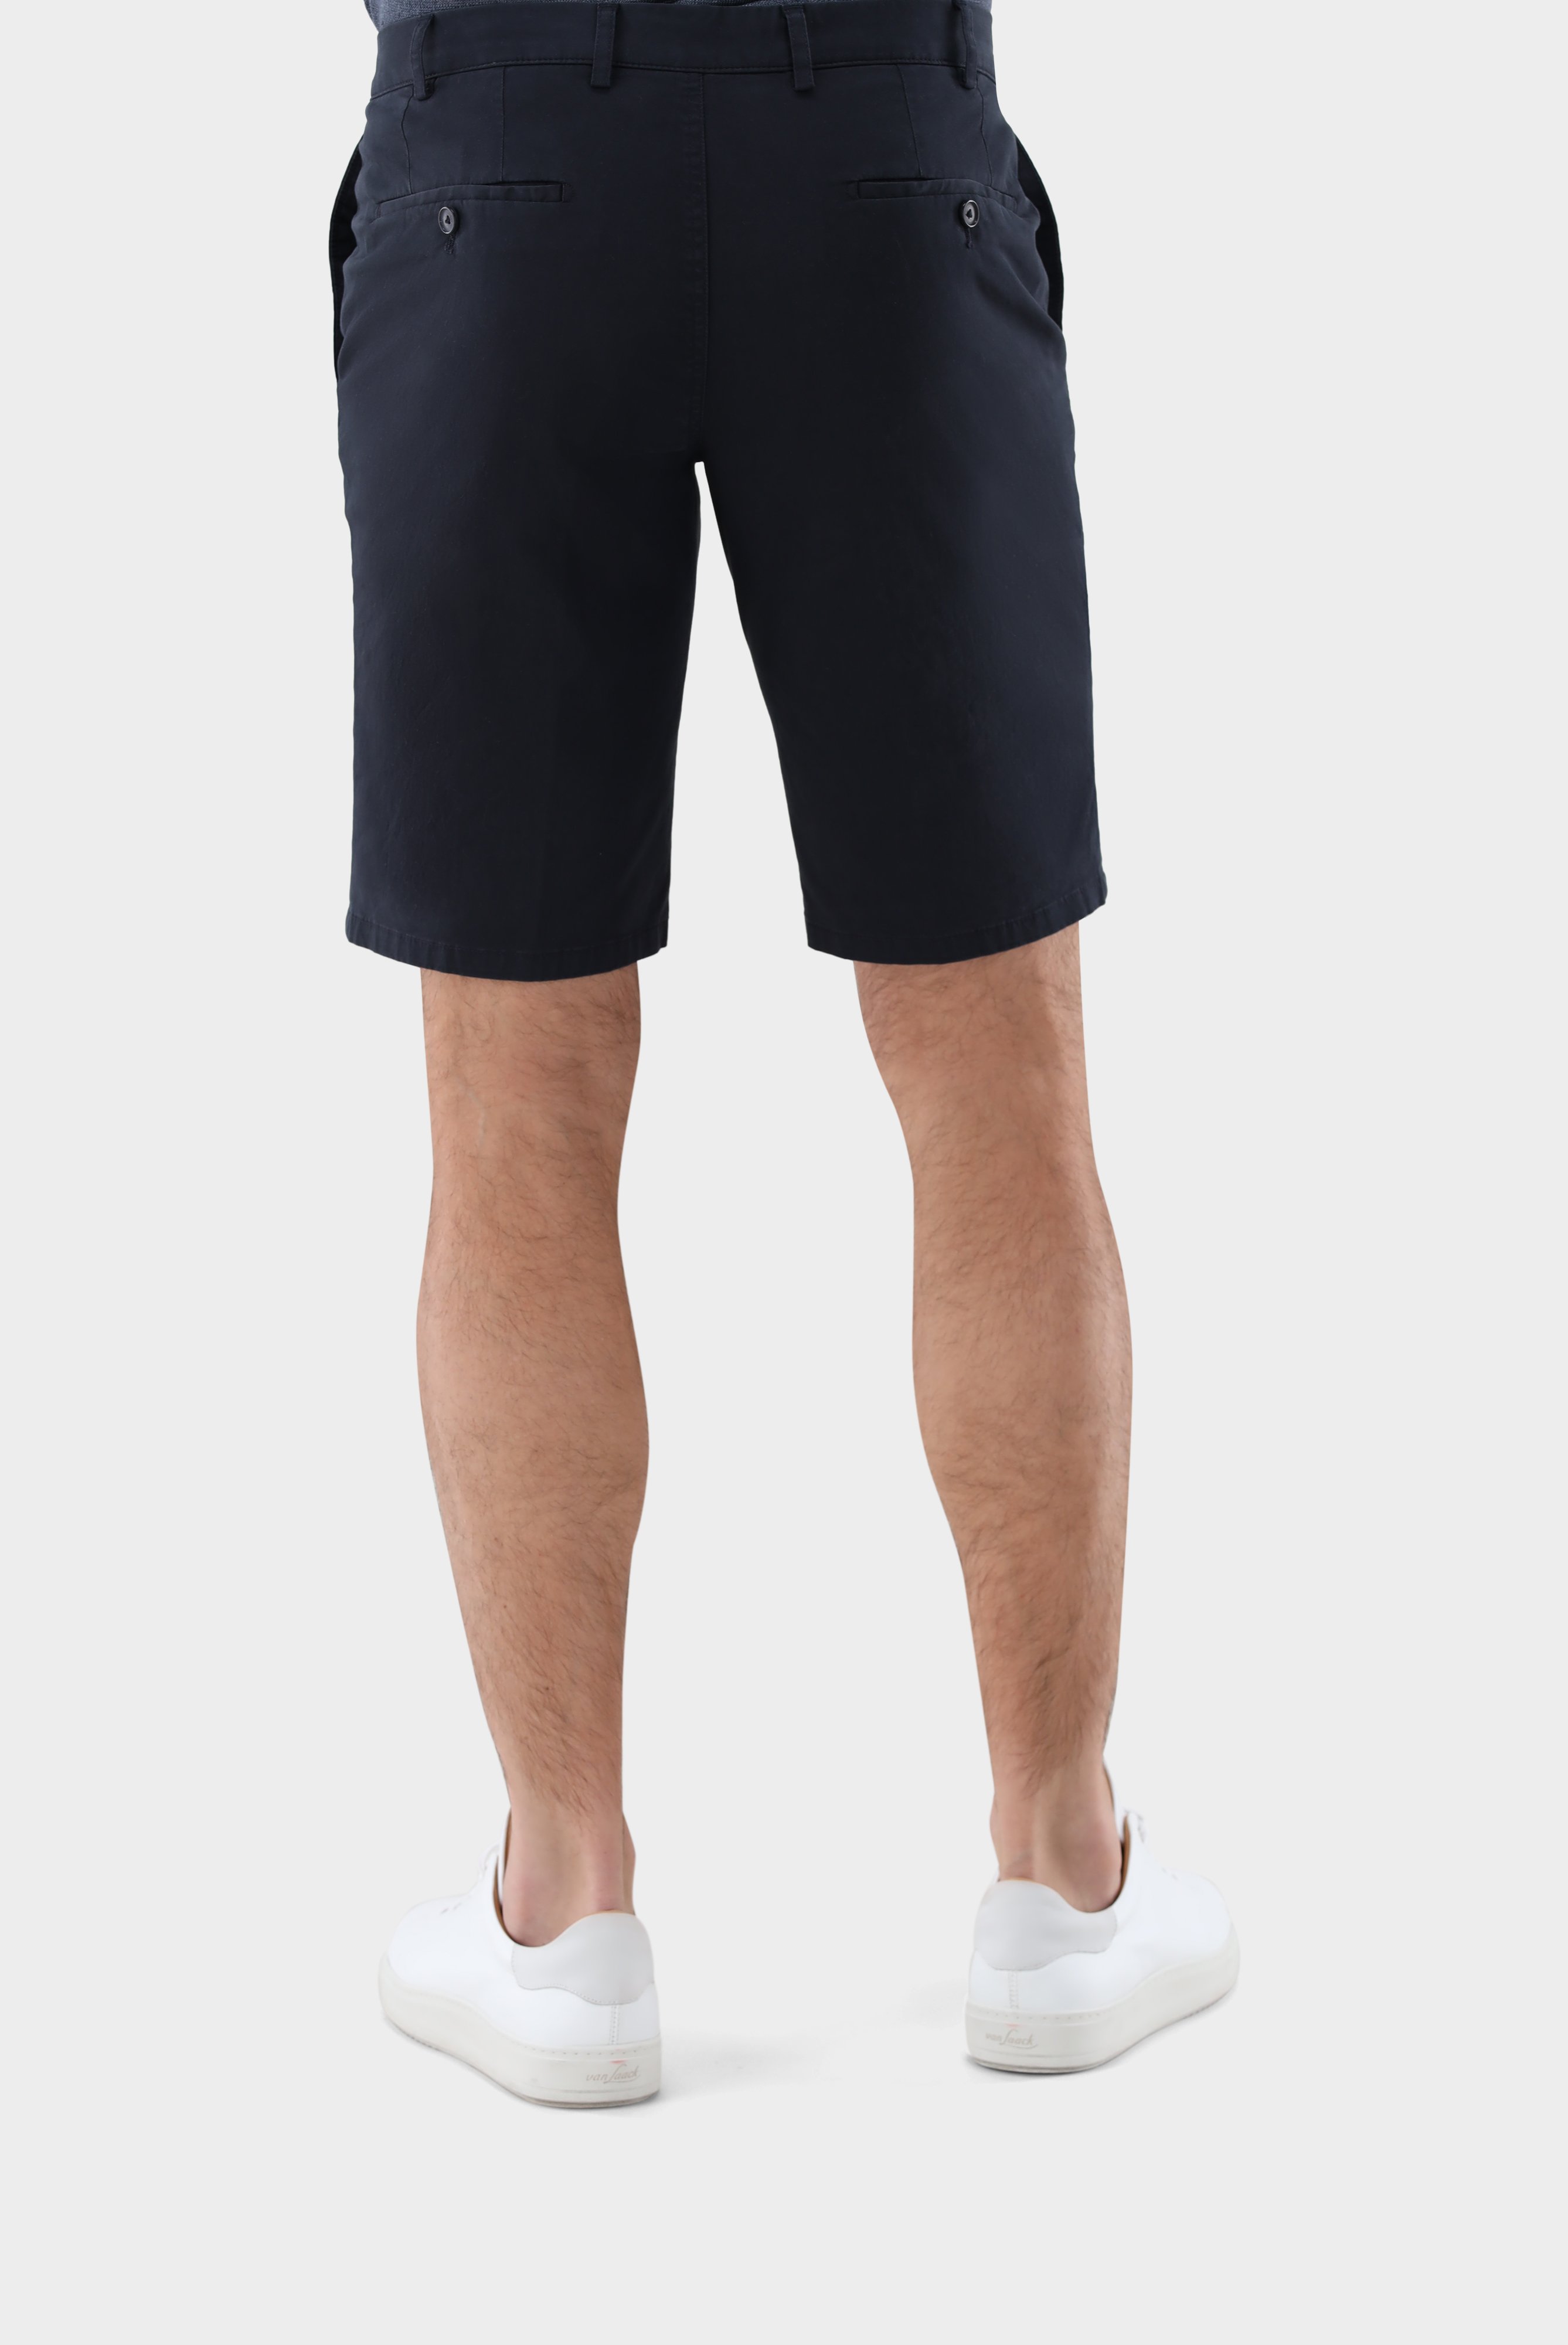 Jeans & Trousers+Men''s Bermuda shorts+80.5974..J00151.790.46